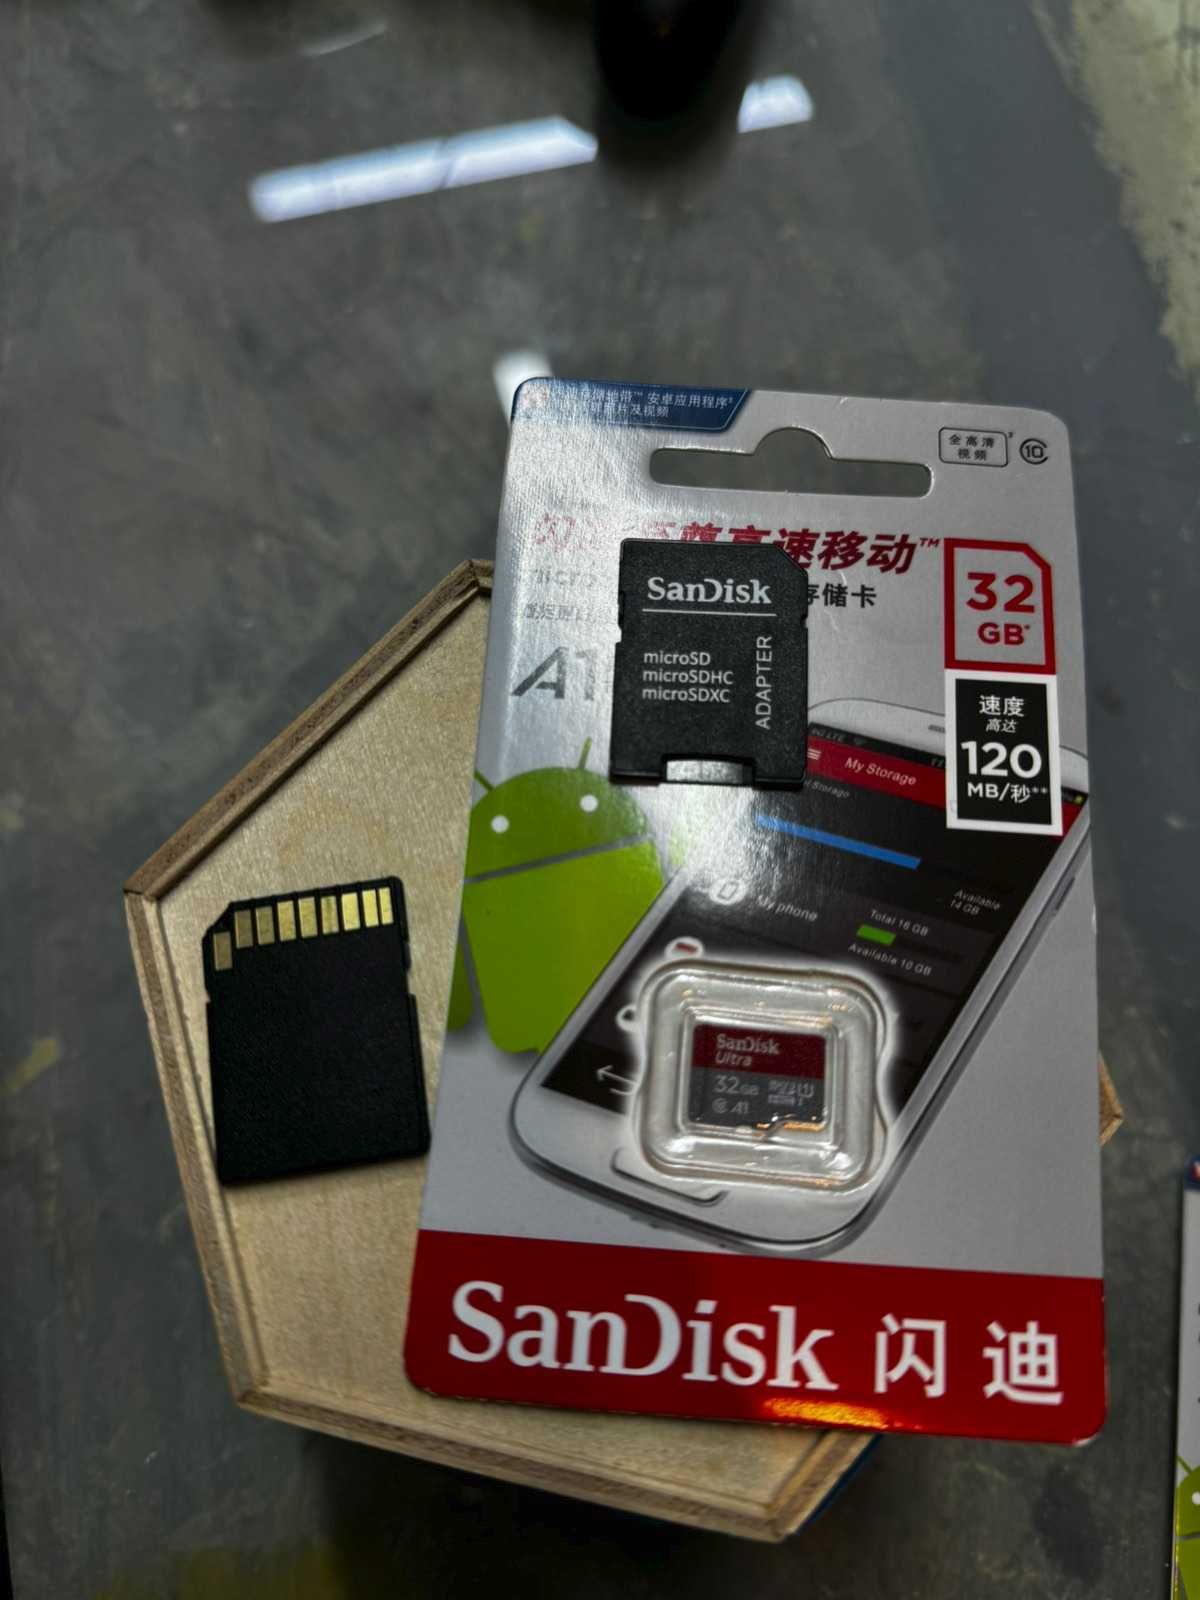 Оригінальна SanDisk Micro TF Card Class 10 32 Гб